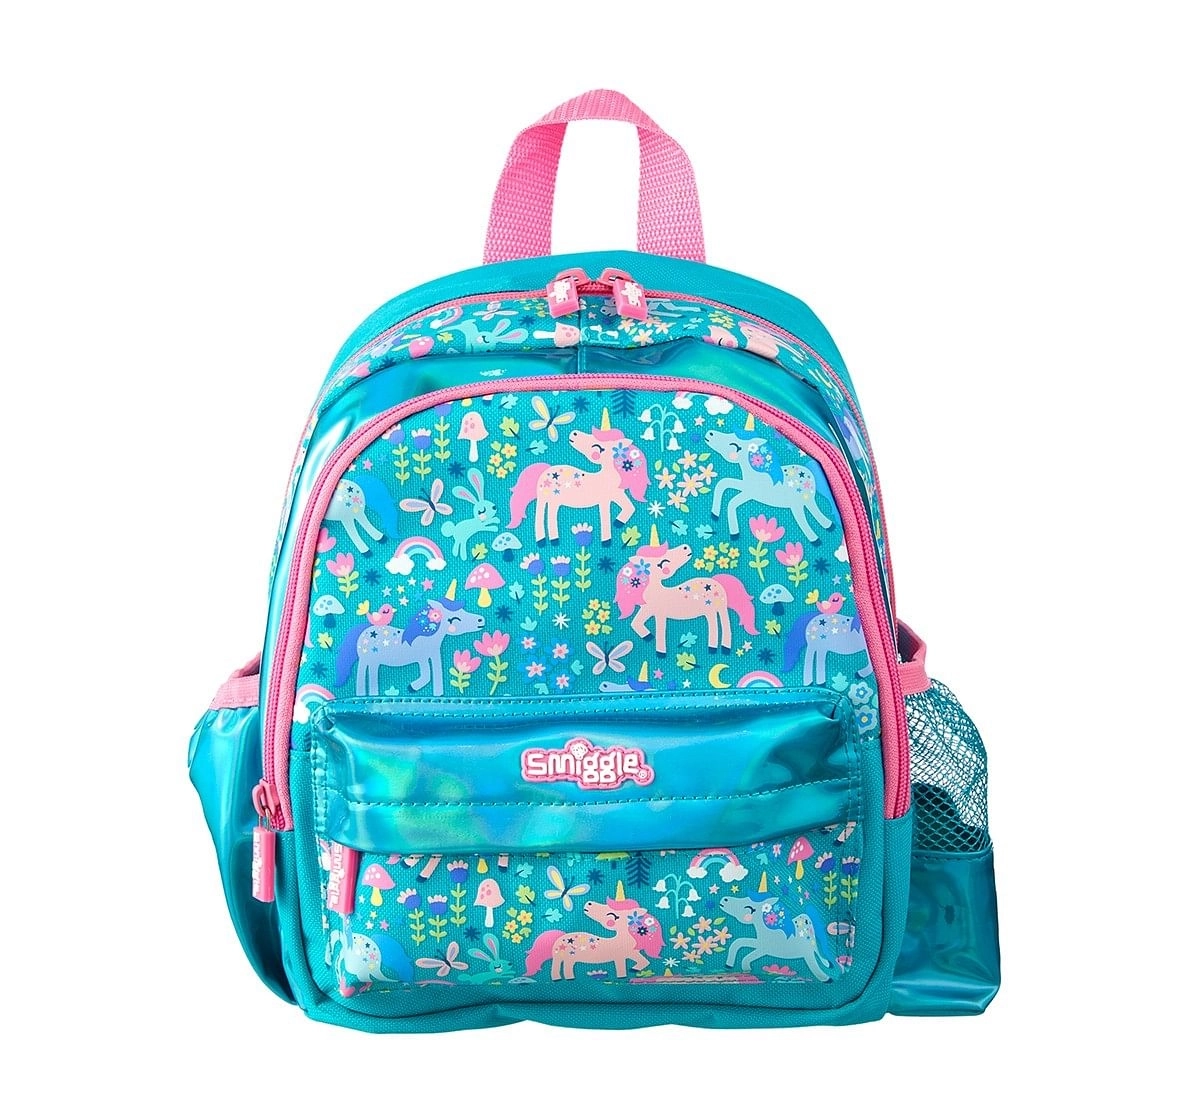 Smiggle Topsy Teeny Tiny Backpack - Unicorn Print Bags for Kids age 3Y+ (Aqua)